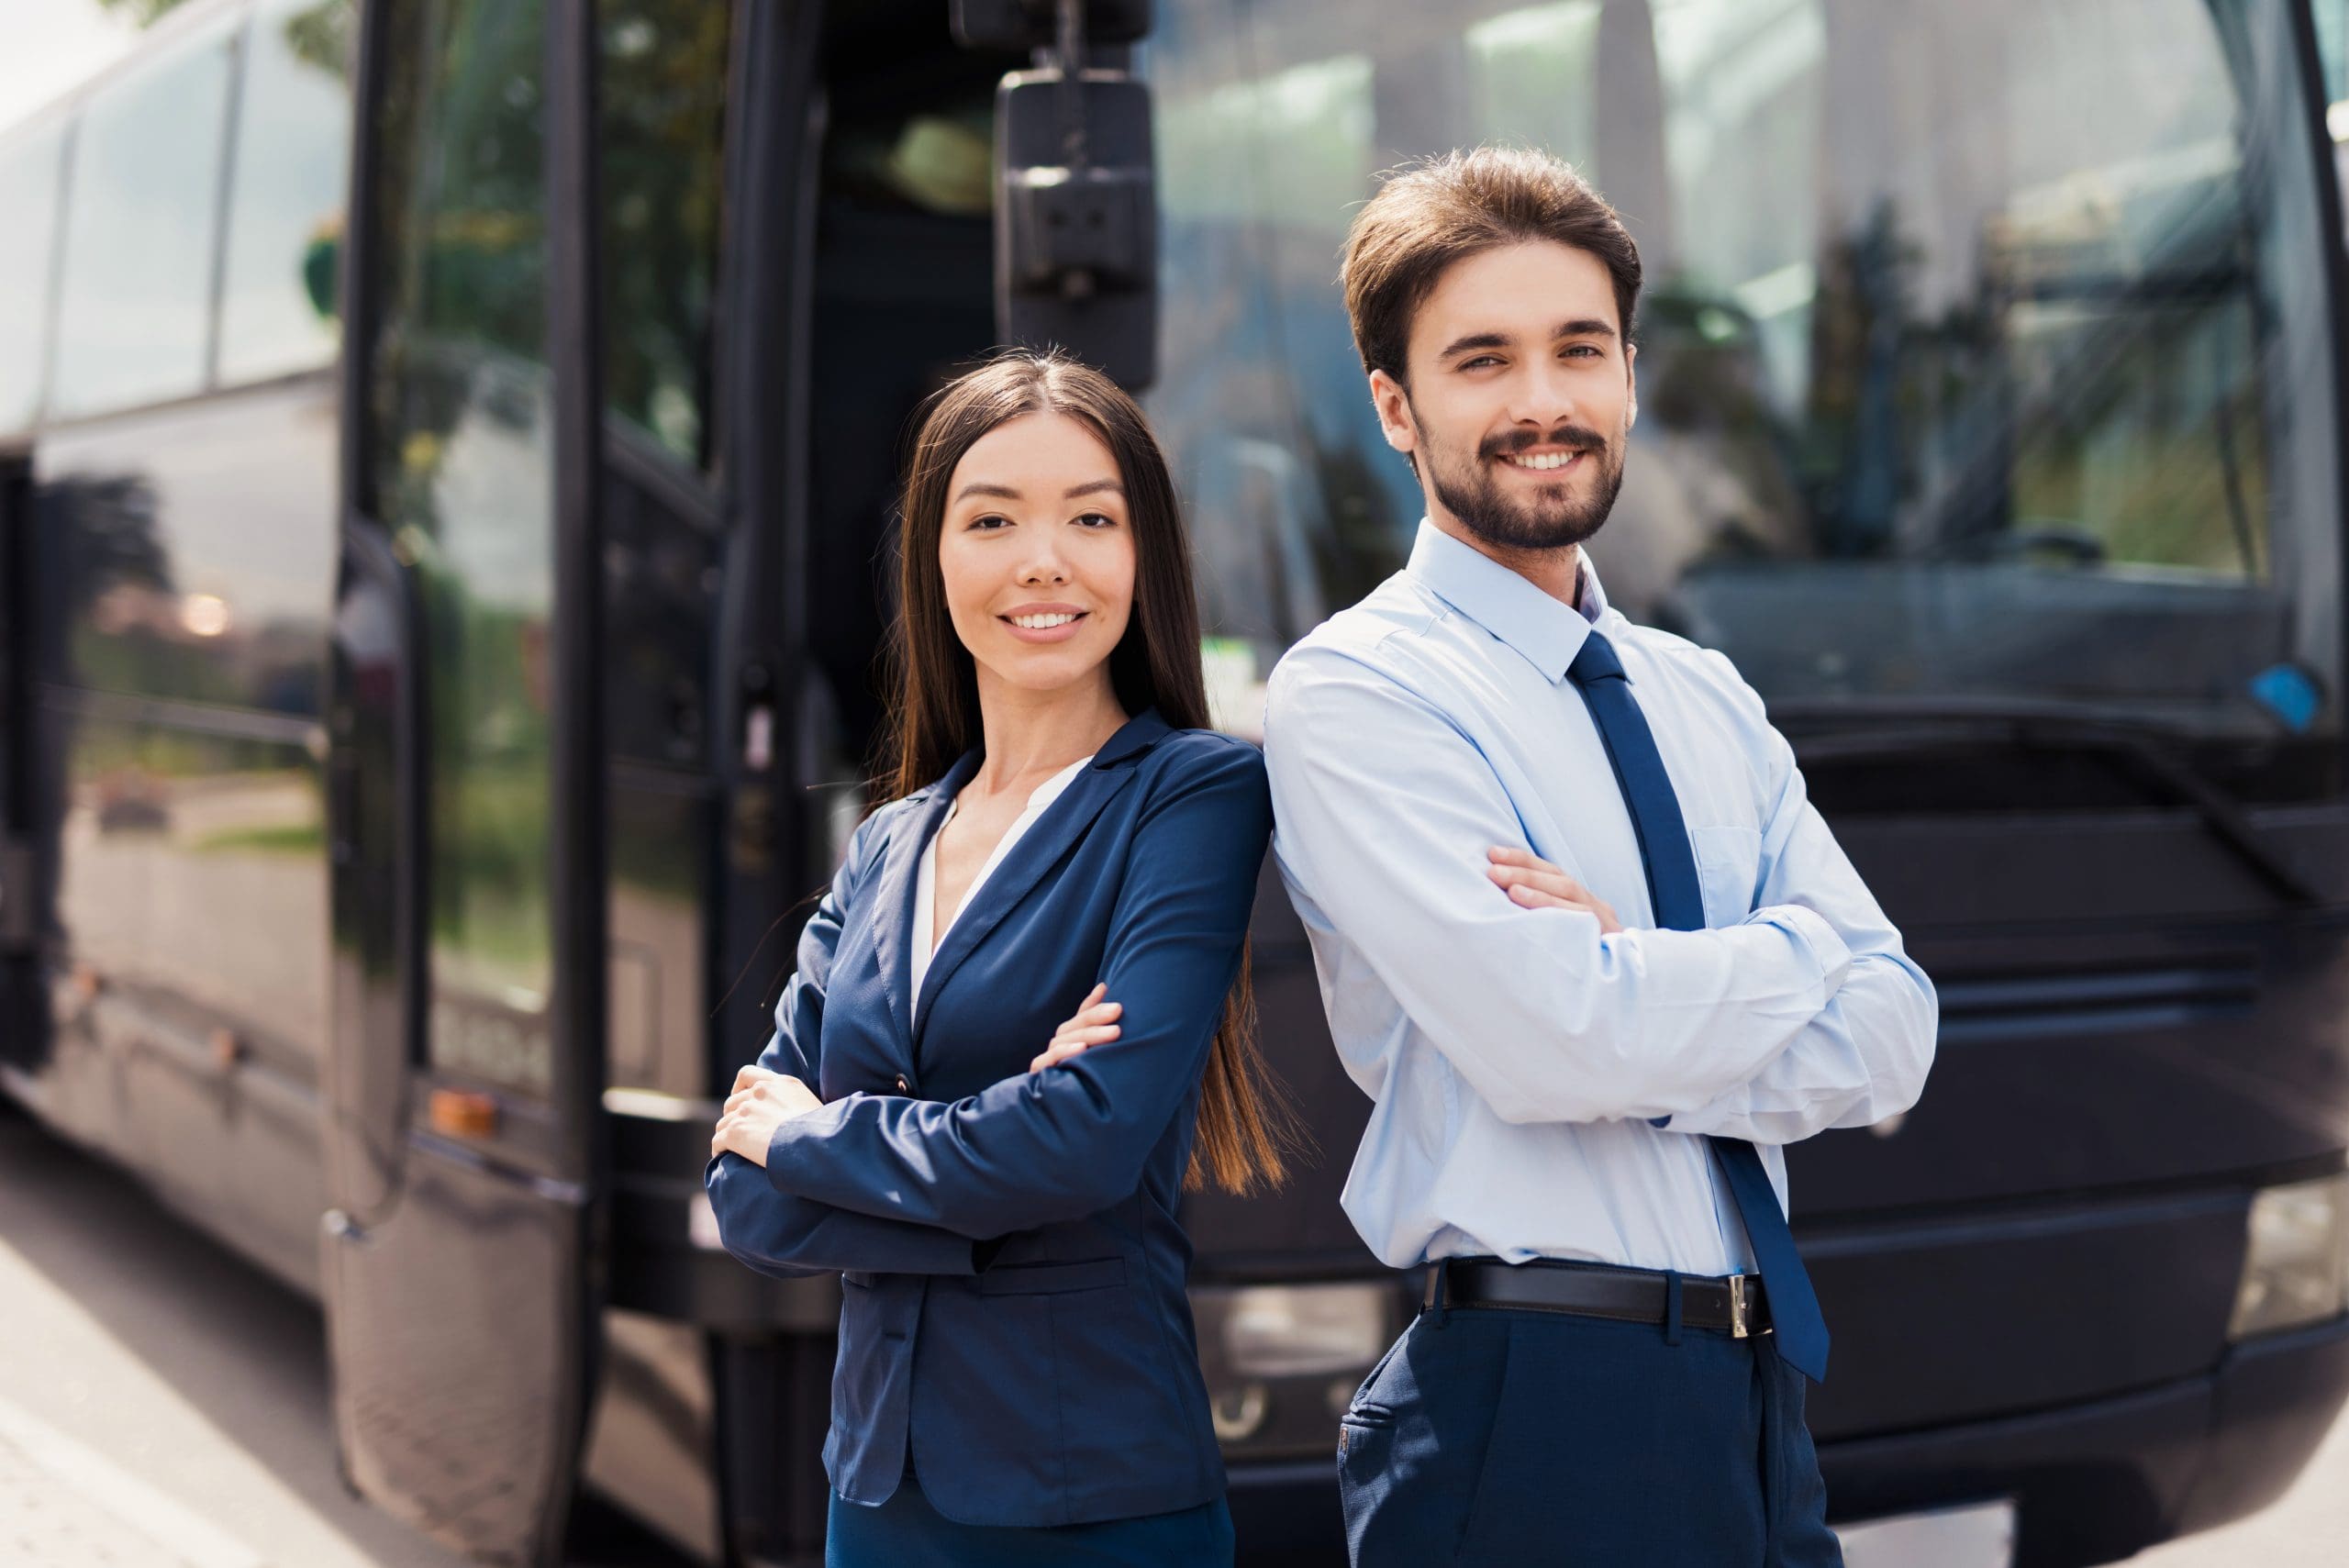 private tour bus driver jobs